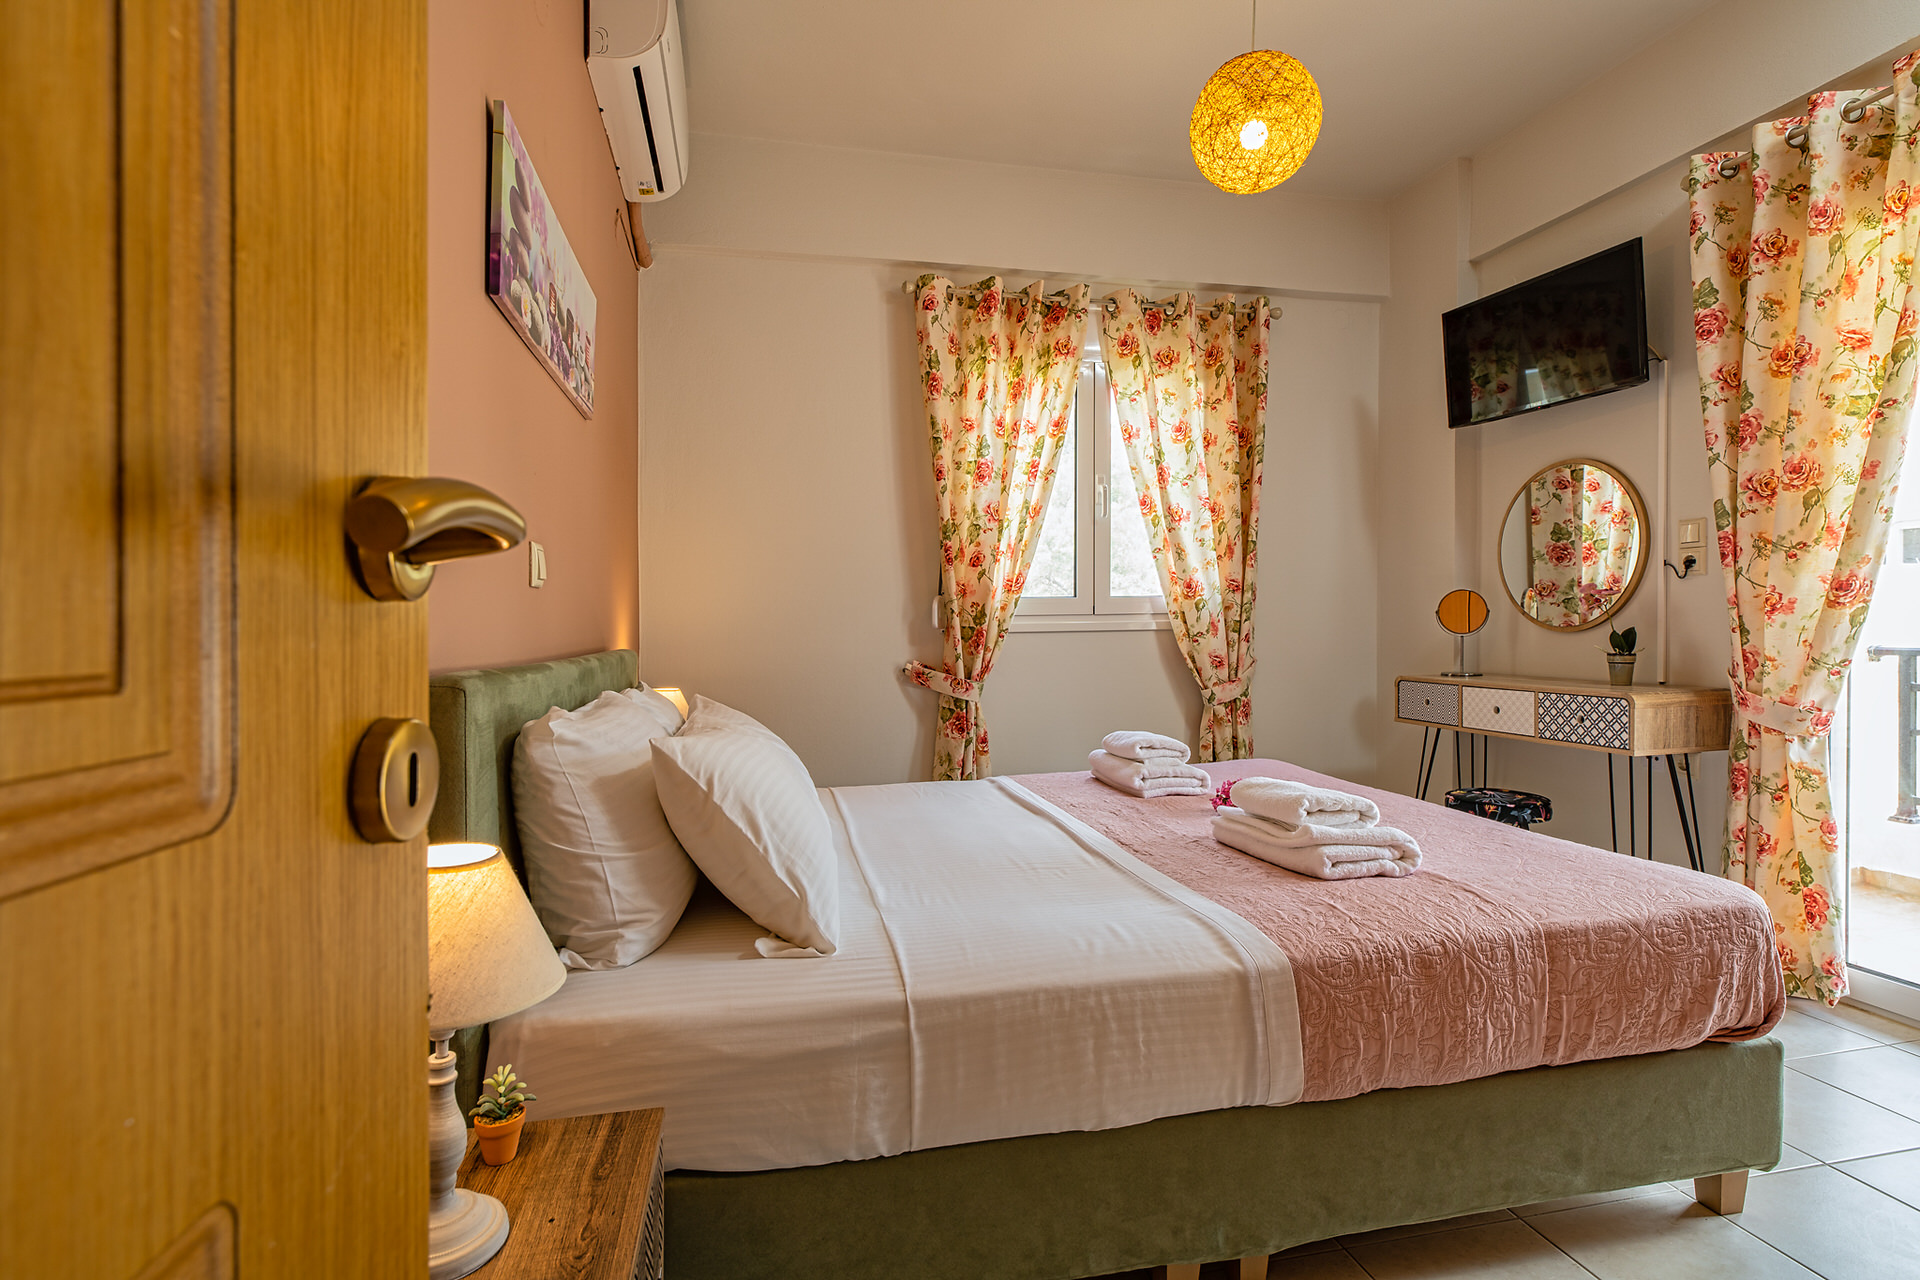 Plakias River Apartment: Αυτό είναι το σπίτι με βαθμολογία 9.8 στην booking για ήρεμες διακοπές στην Κρήτη